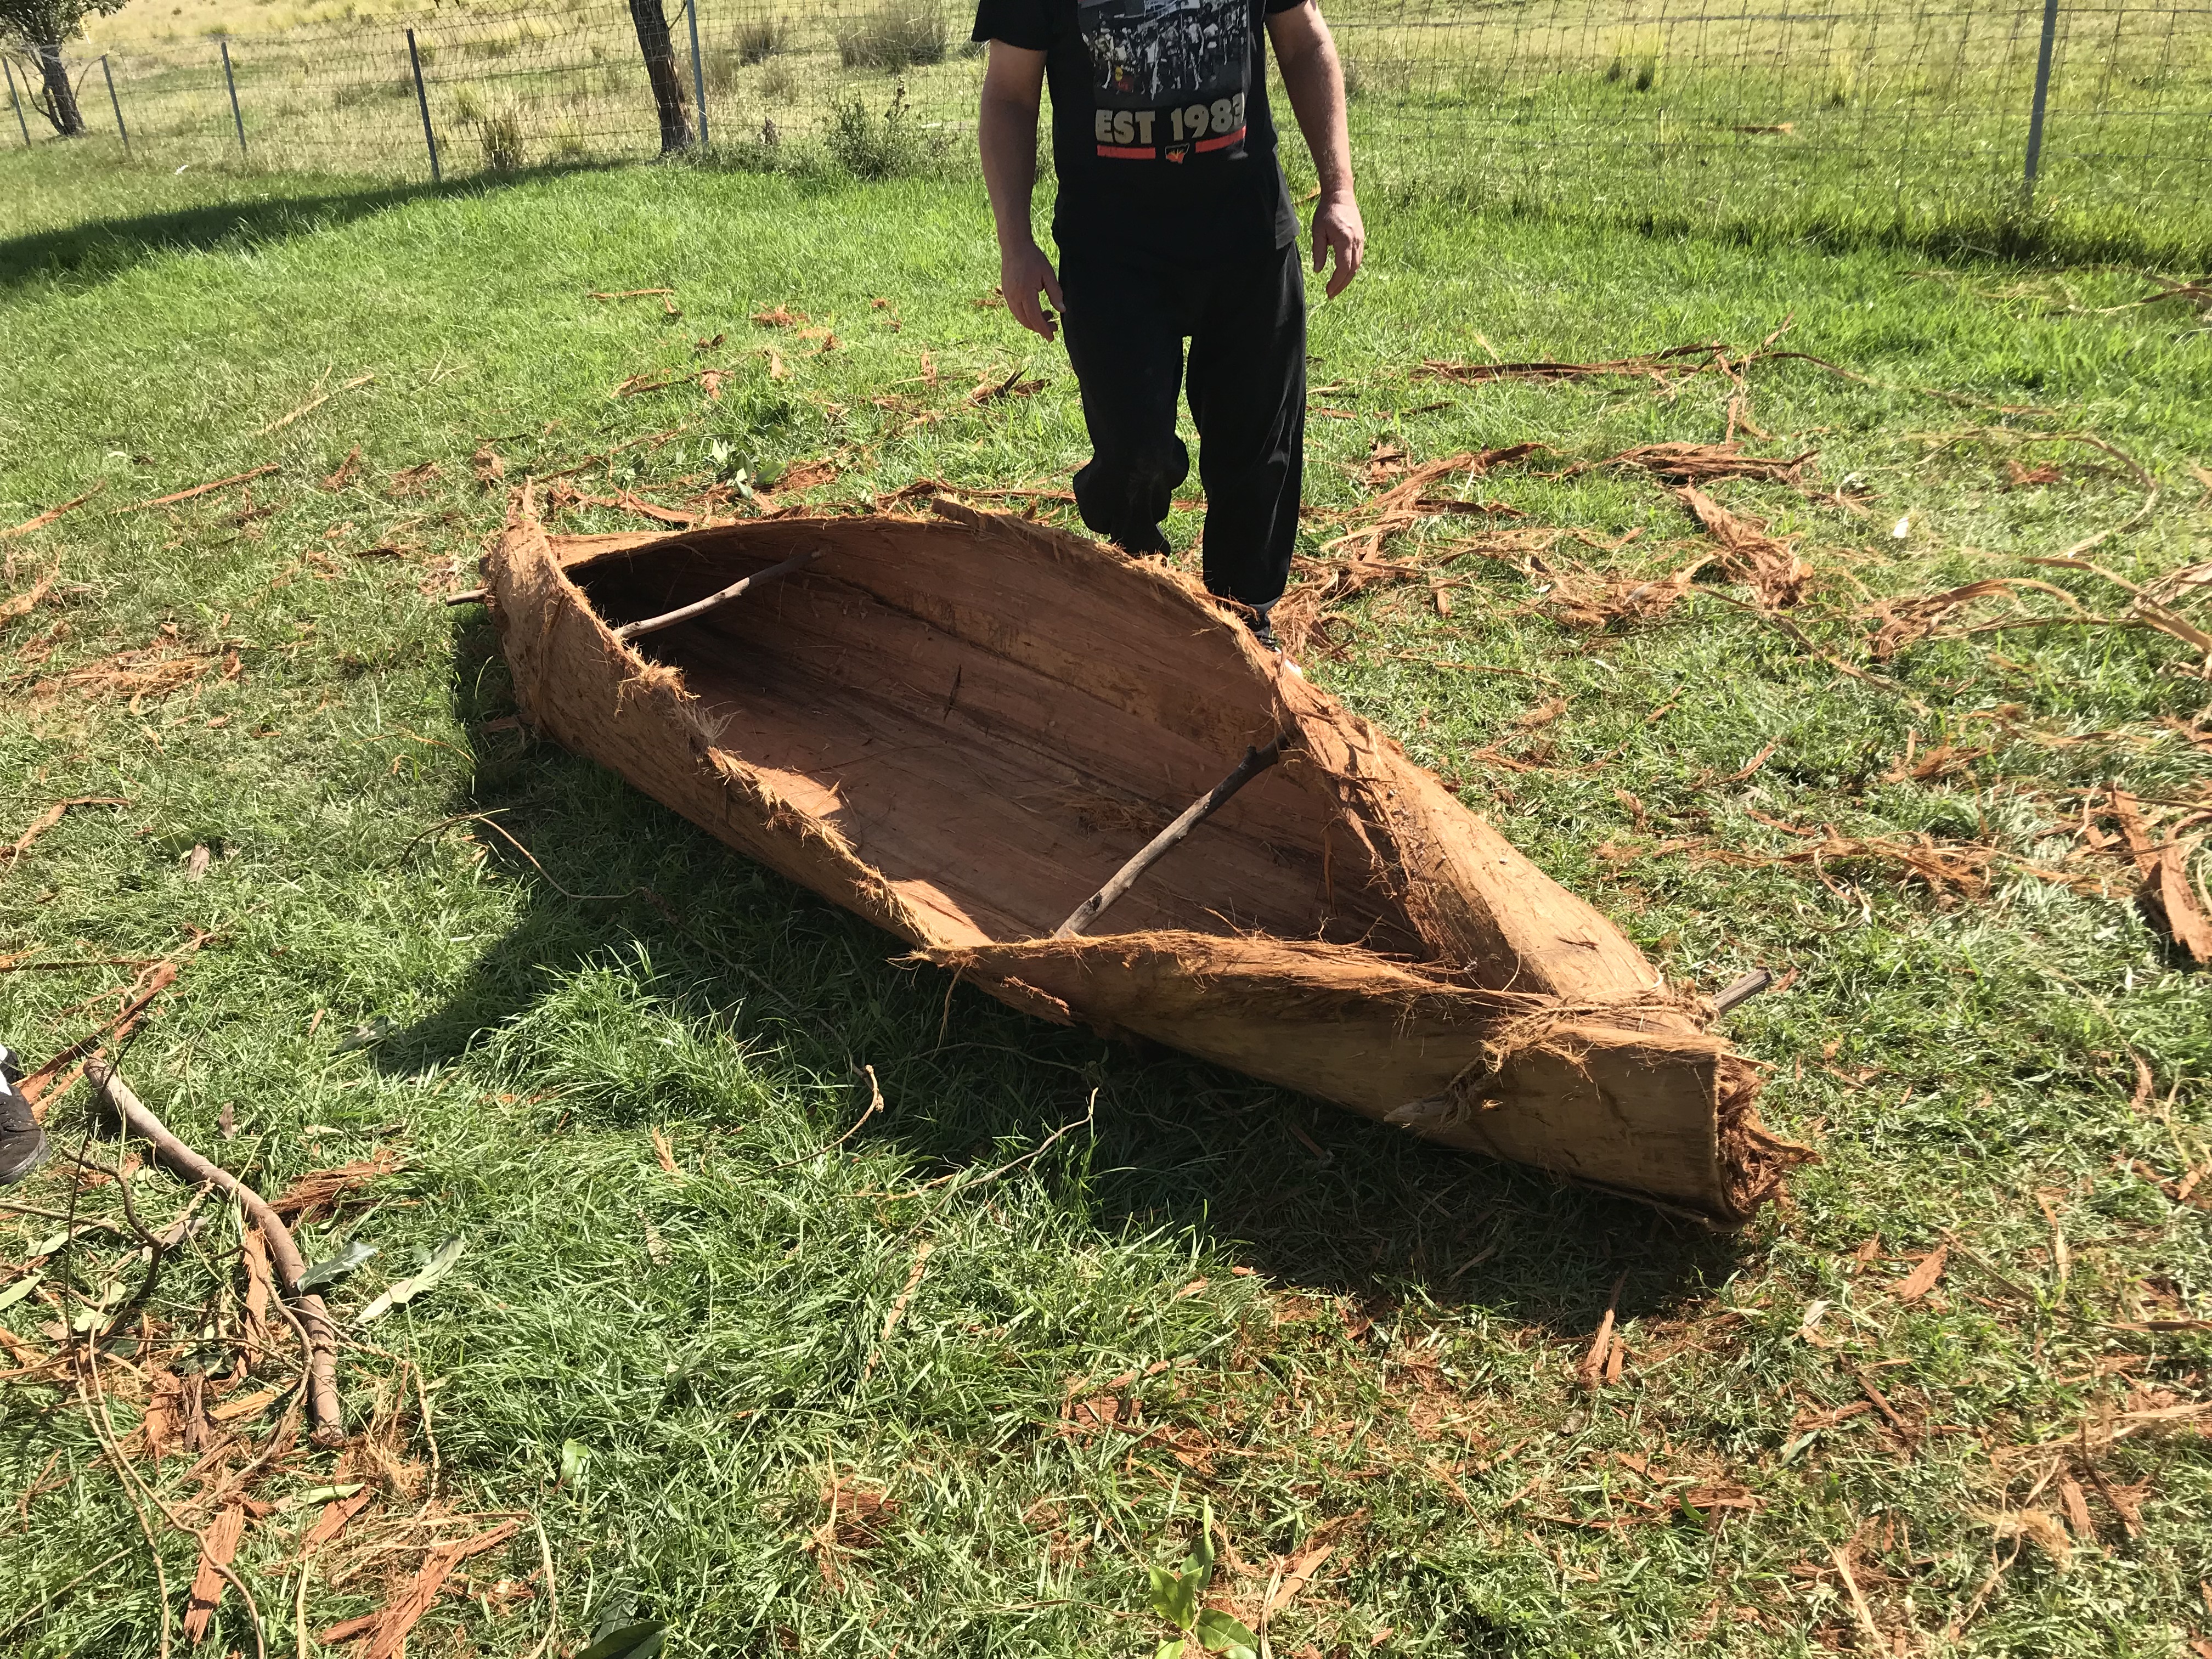 The Canoe takes shape